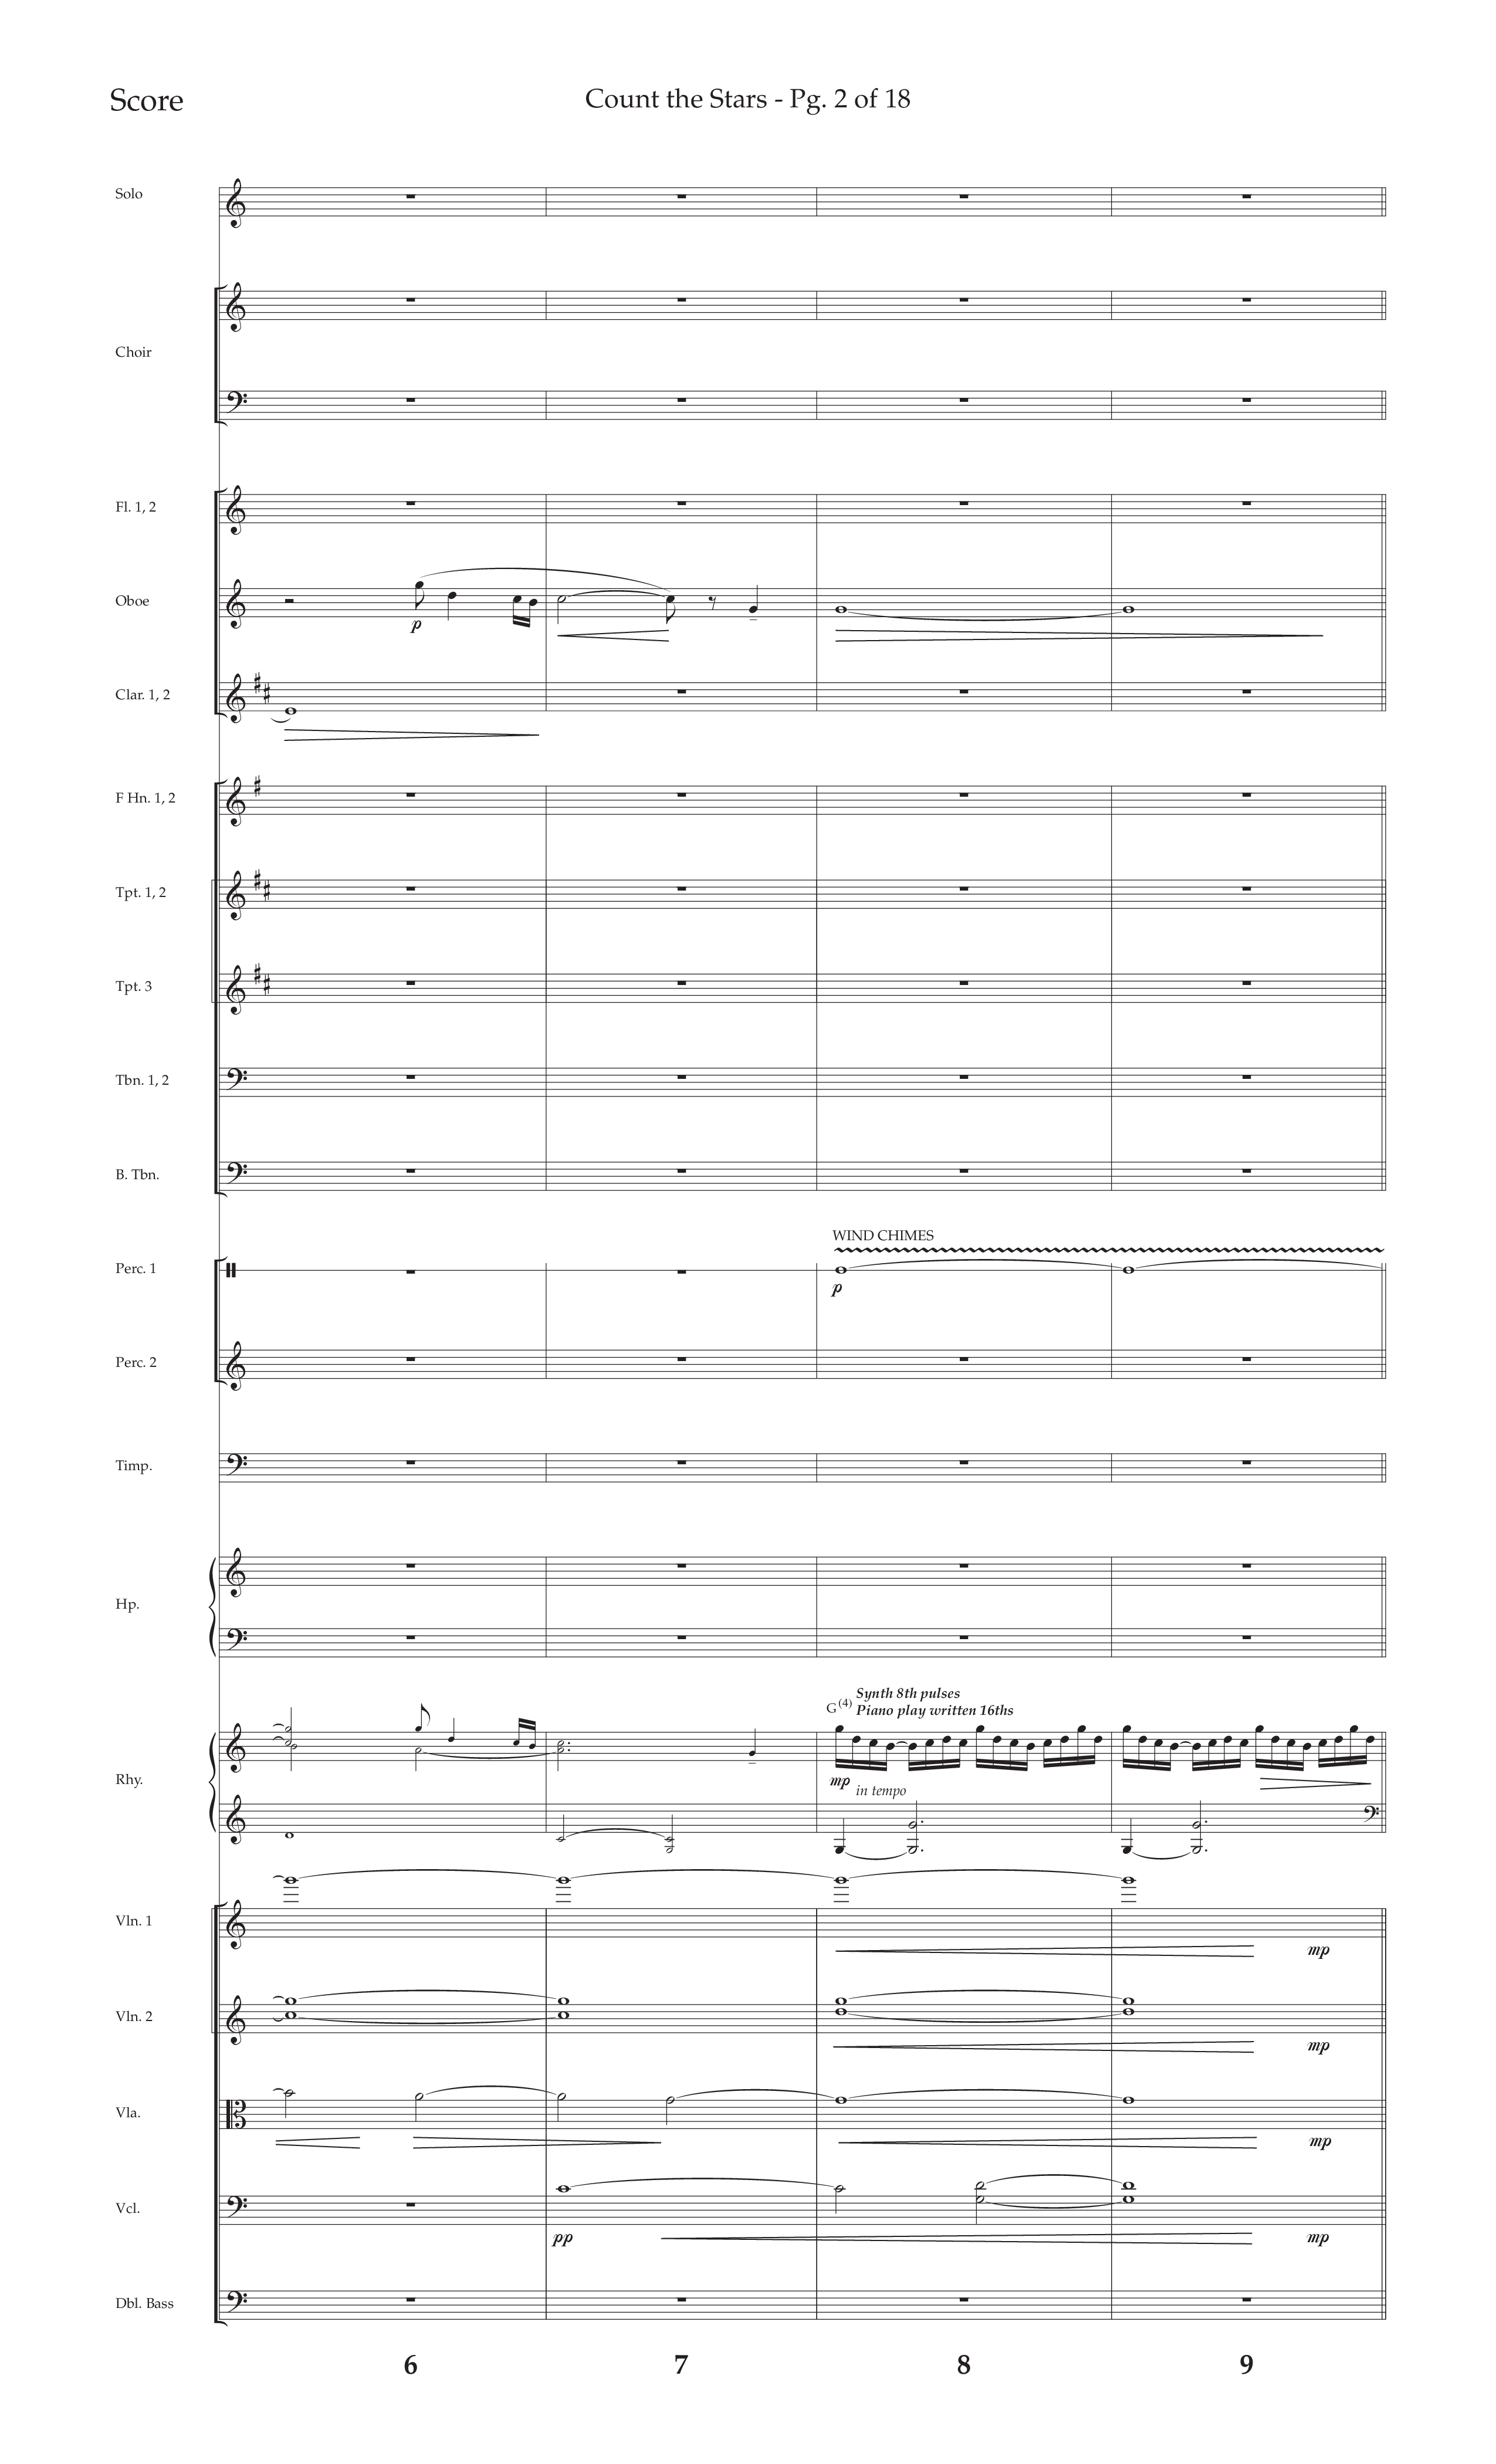 Count The Stars (Choral Anthem SATB) Orchestration (Lifeway Choral / Arr. Phillip Keveren / Arr. Kent Hooper)